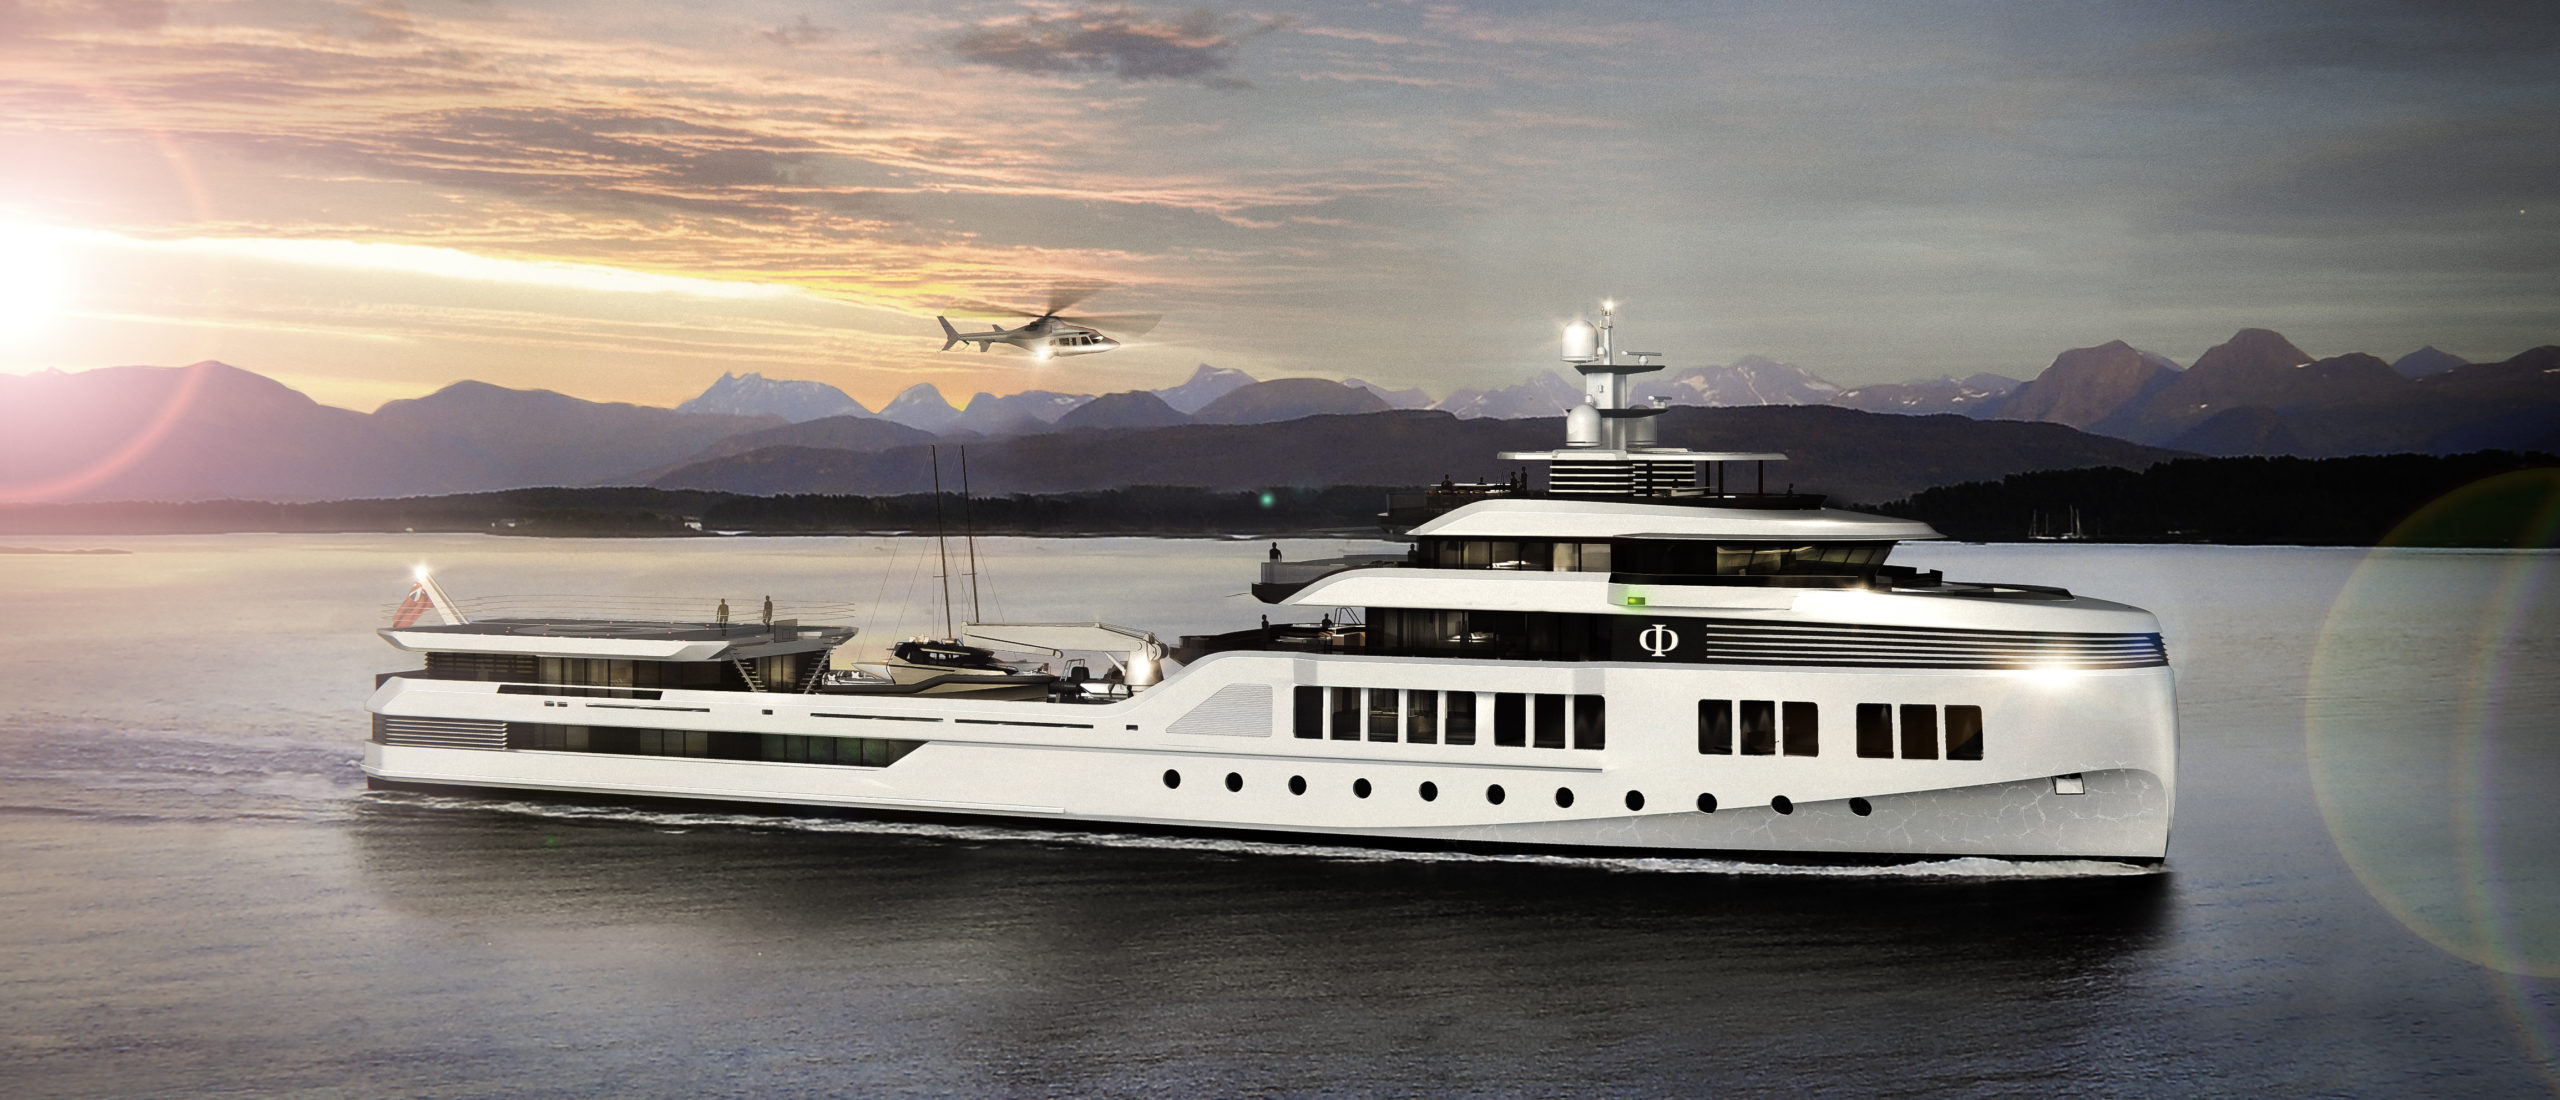 Vripack - yacht concepts - Utopia at sea - Yacht with zero footprint